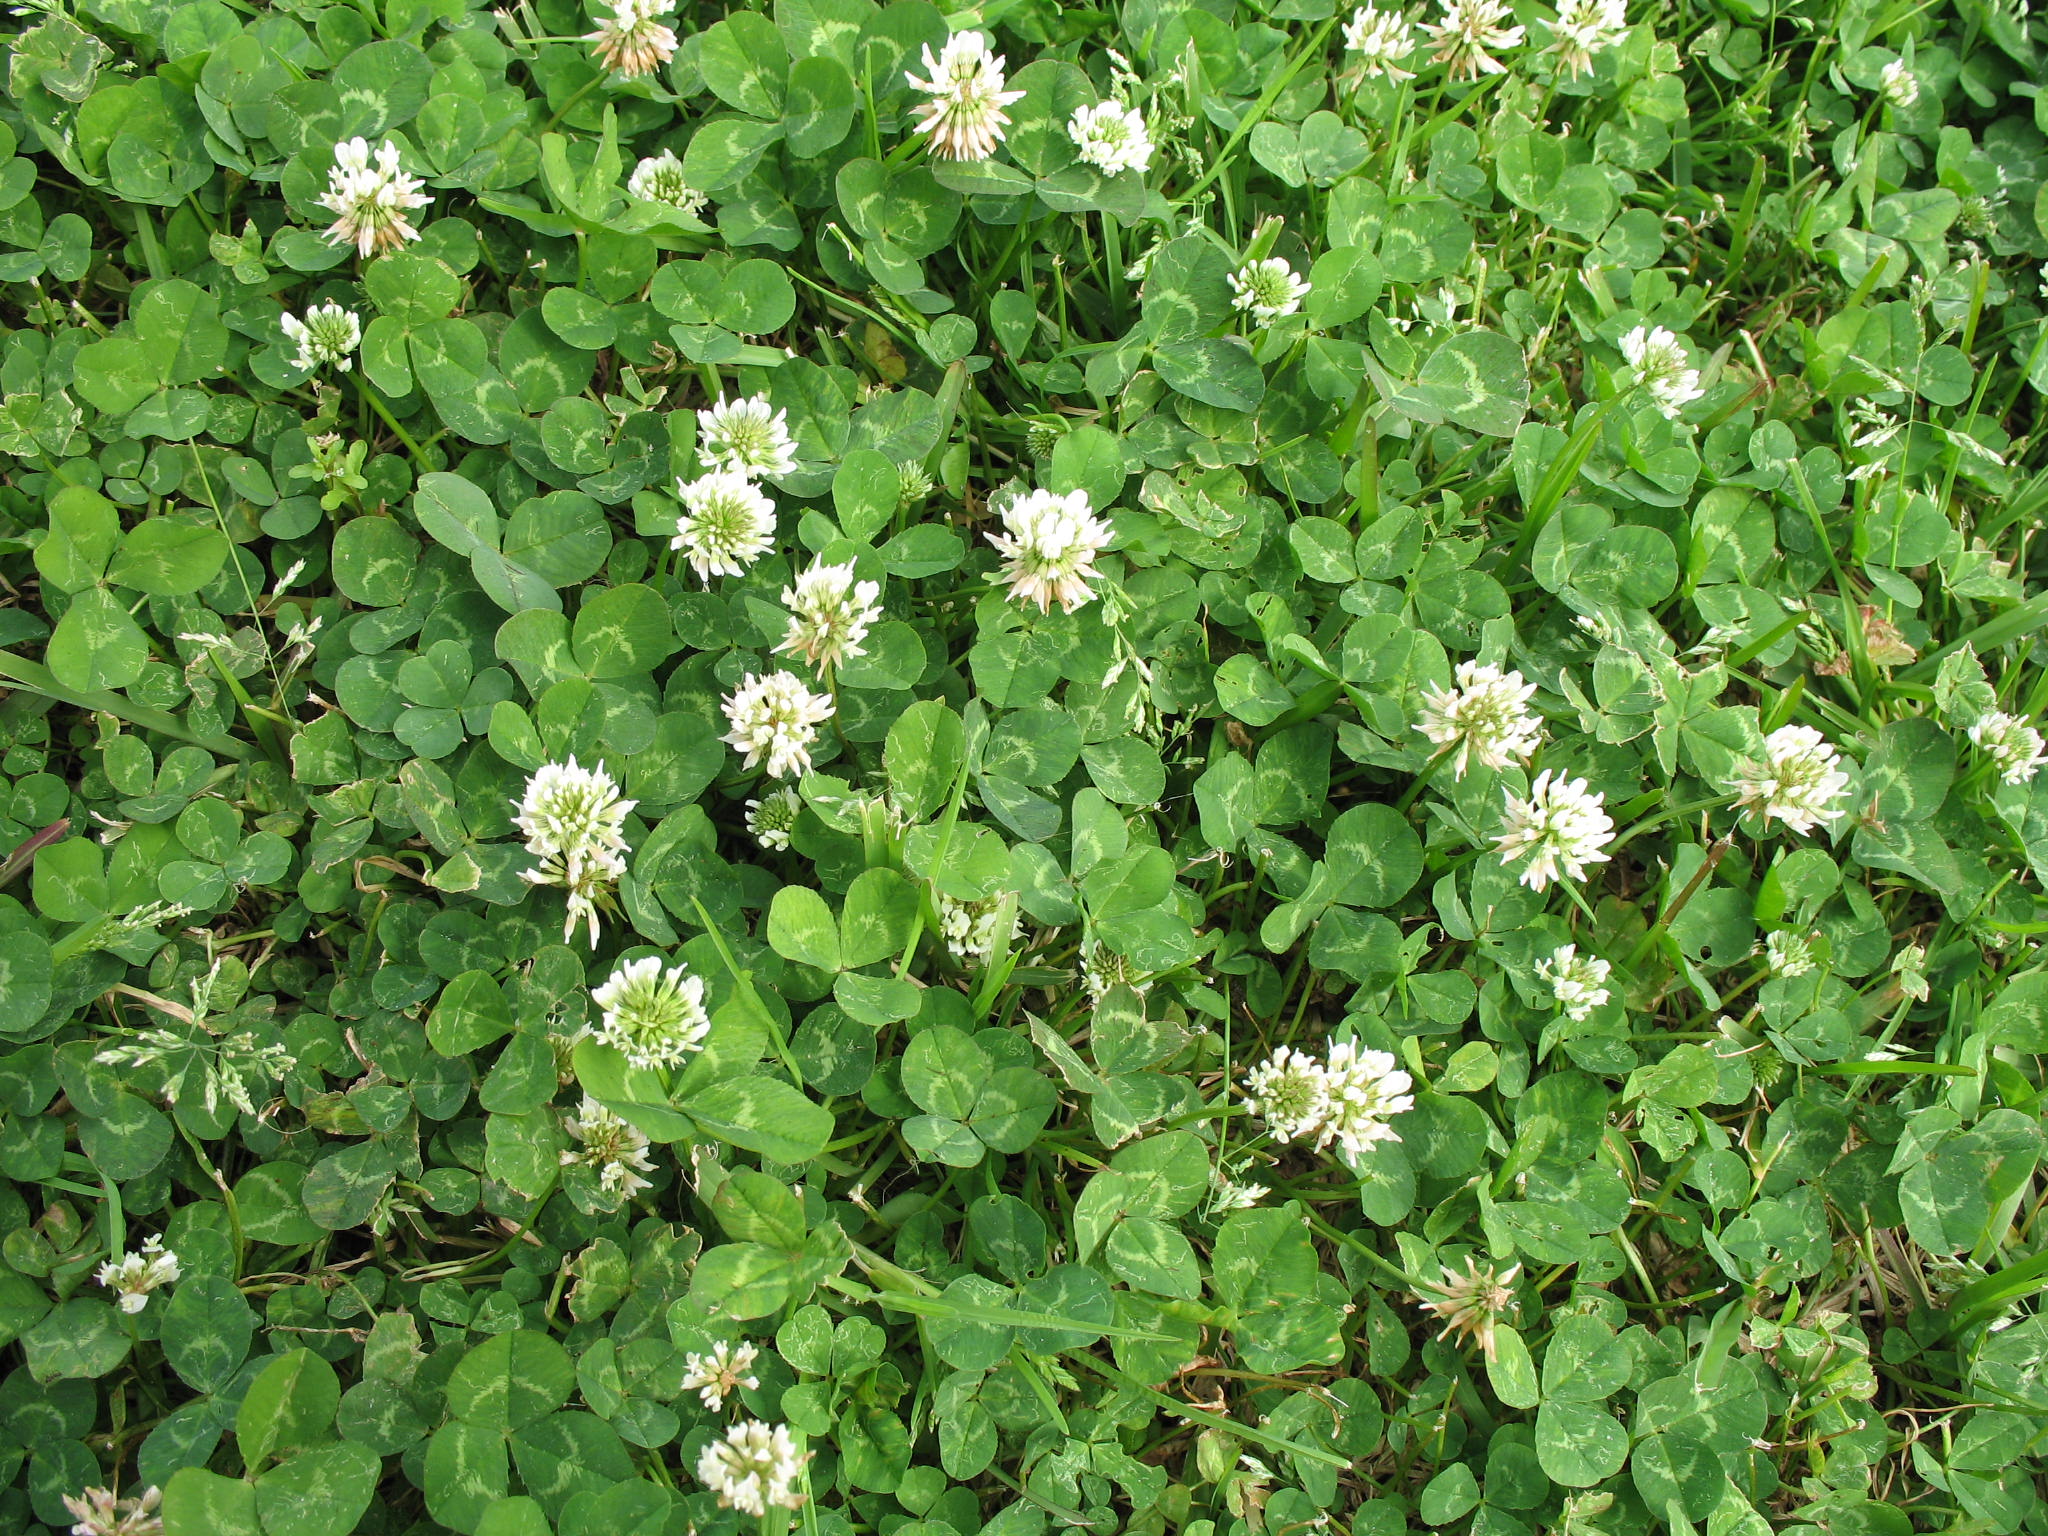 Trifolium repens / White Clover